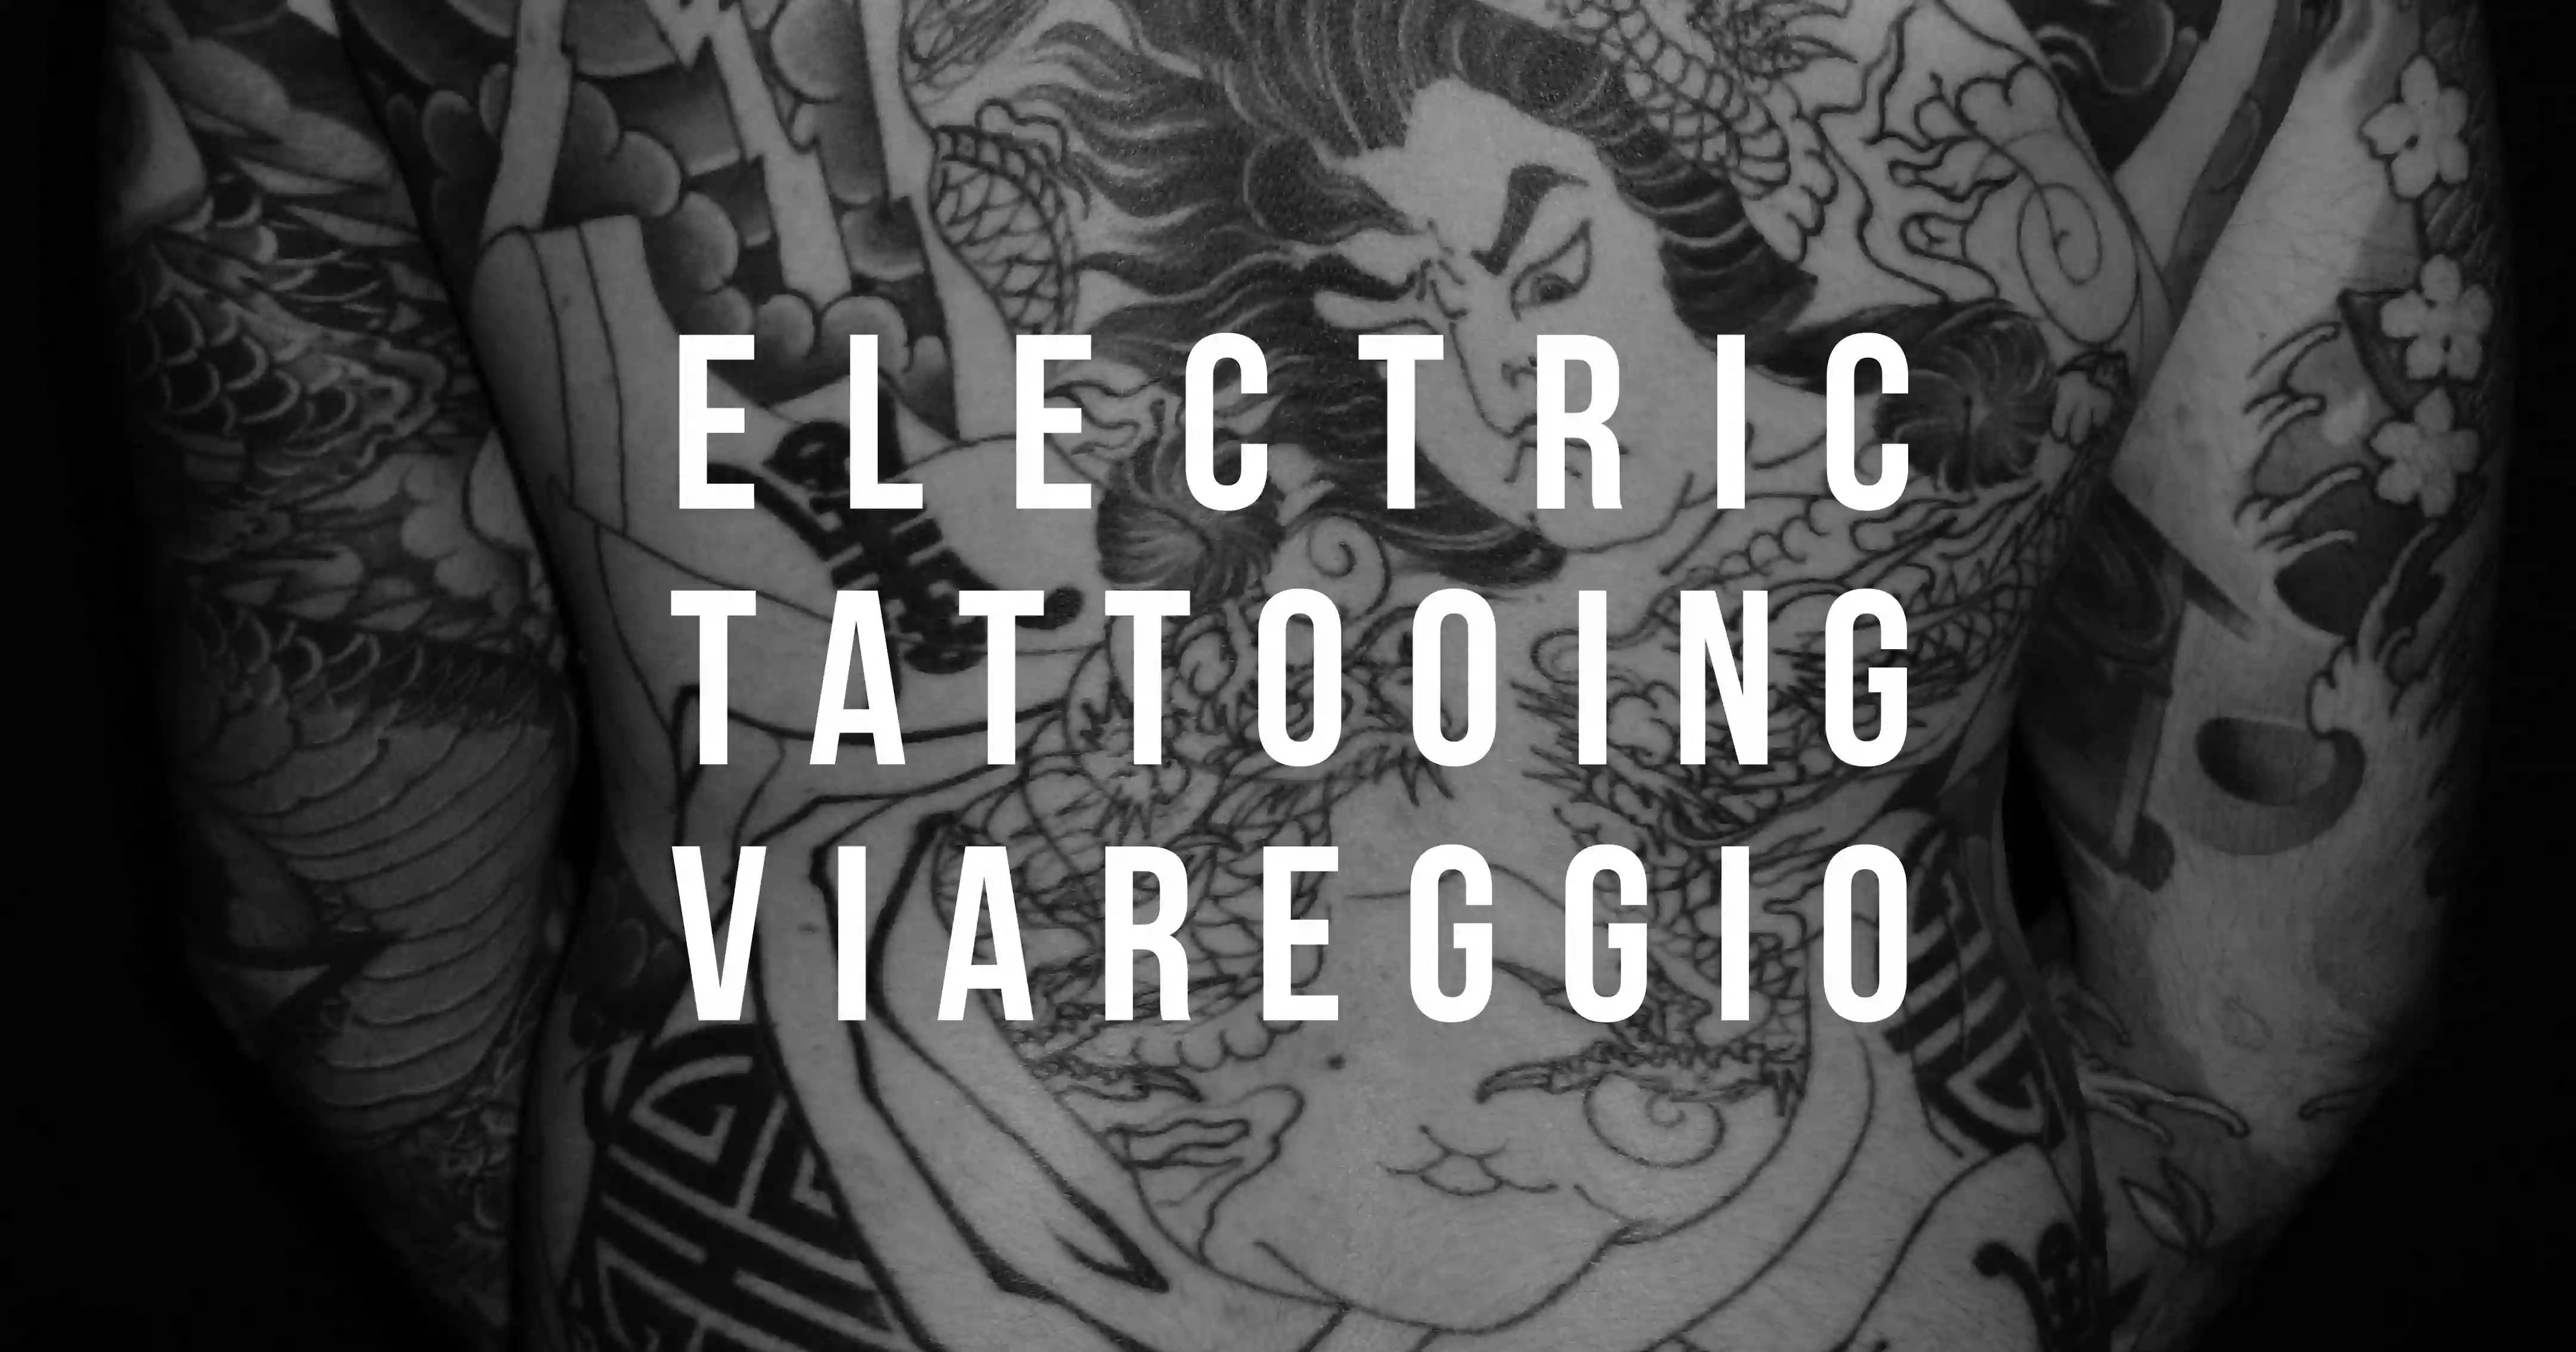 Electric Tattooing Viareggio